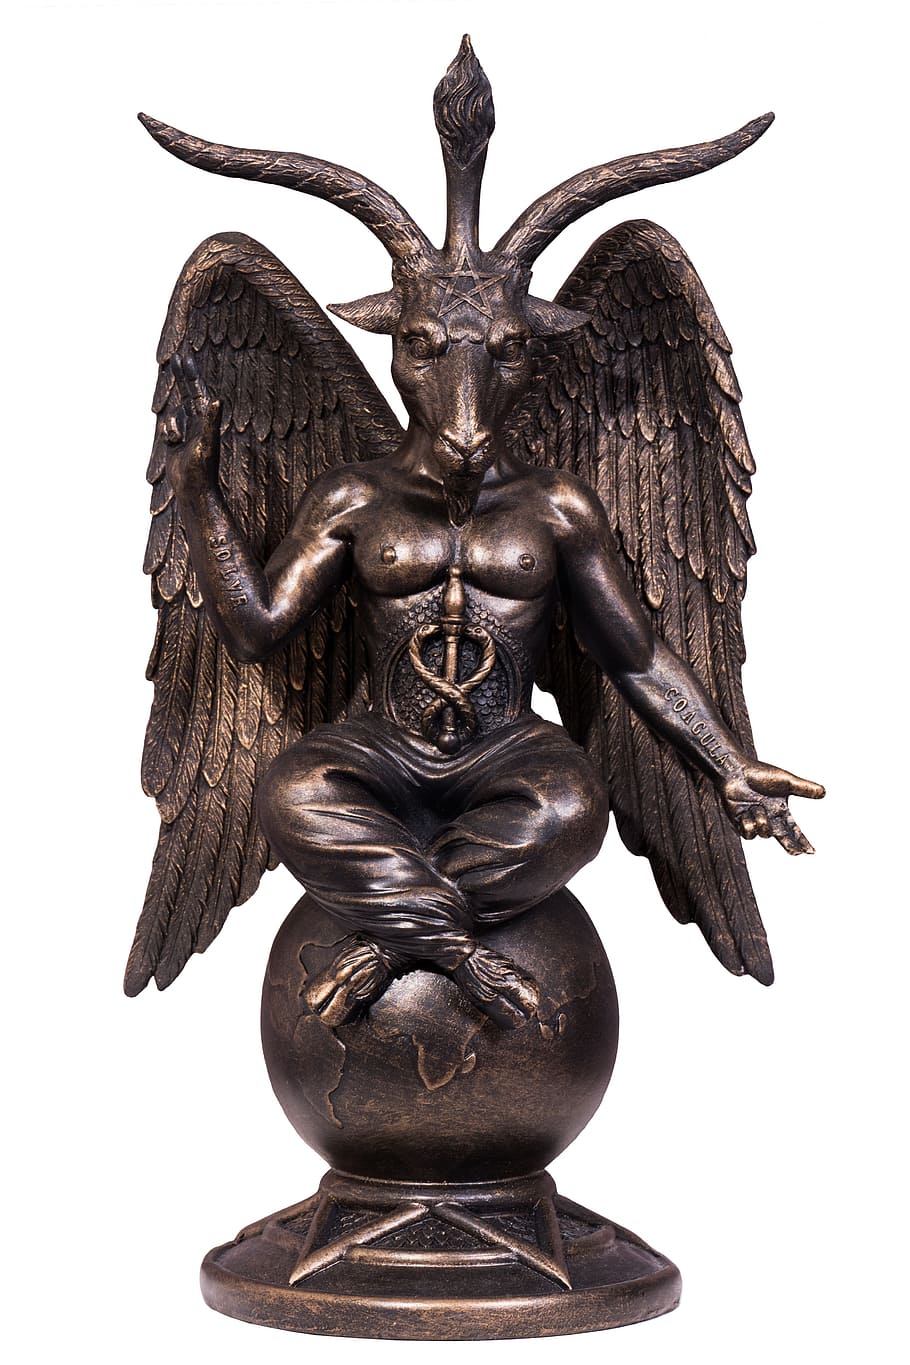 baphomet figurine, Baphomet, figurine, devil, satan, pentacle, isolated, white Background, isolated On White, statue